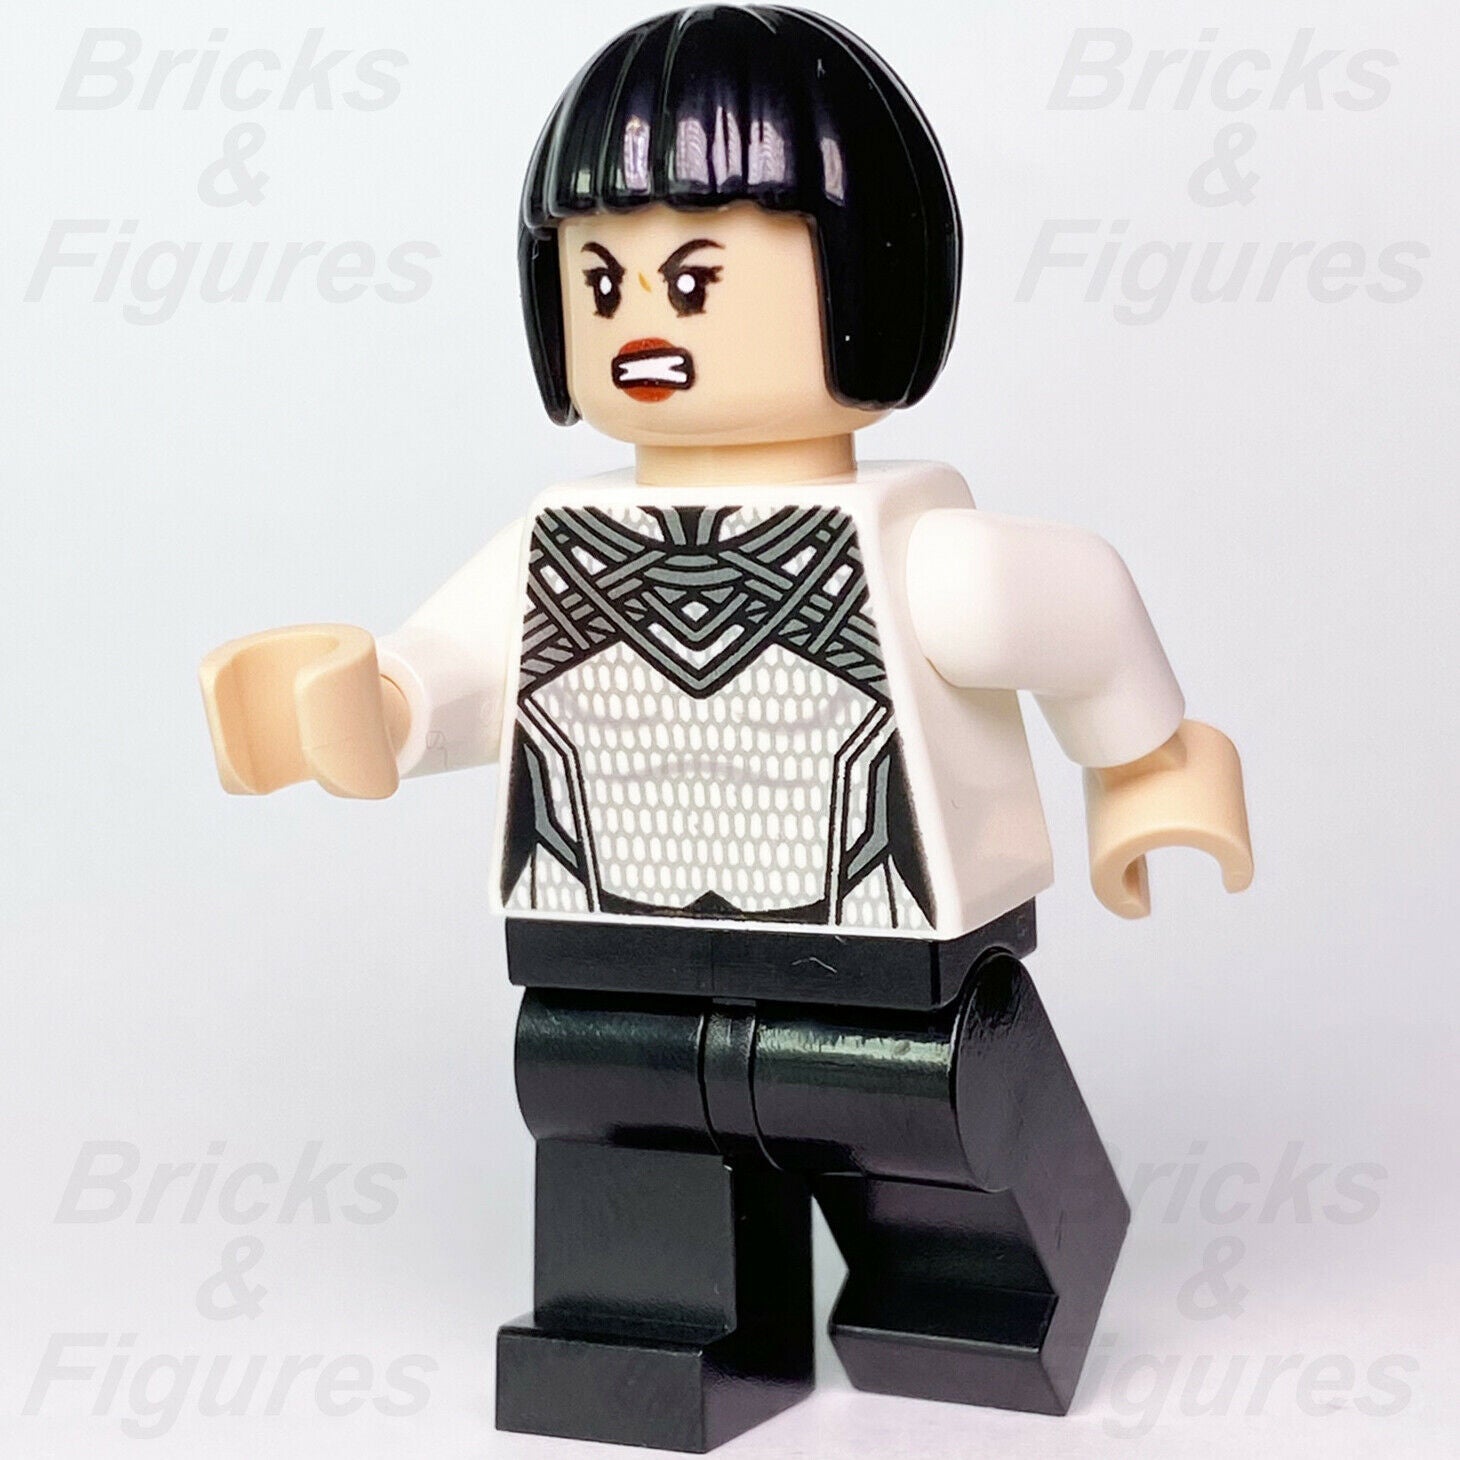 New Marvel Super Heroes LEGO Xu Xialing Shang-Chi Minifigure 76177 sh706 - Bricks & Figures